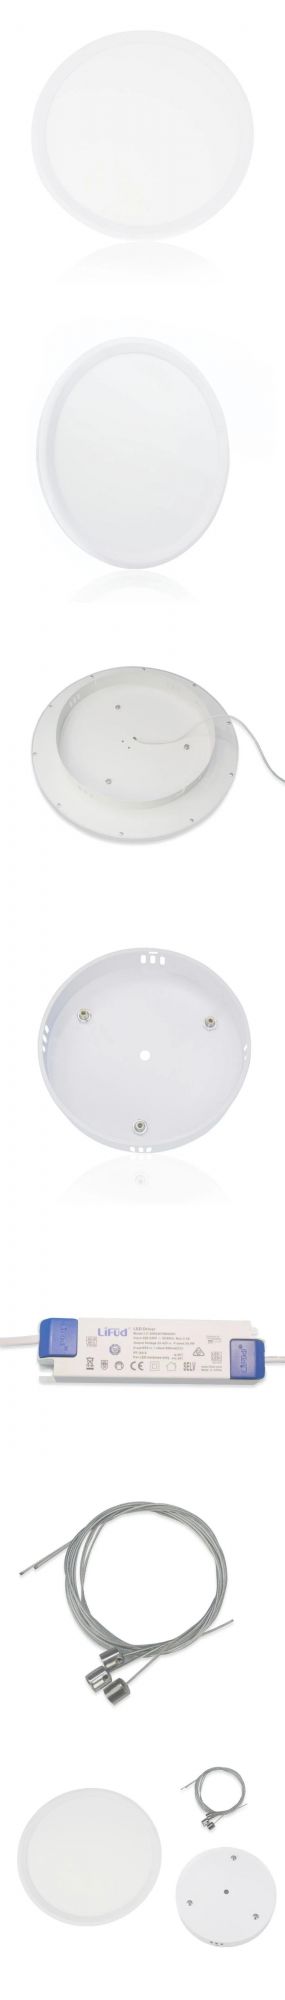 600mm Diameter Ceiling Suspended Big Round LED Panel Light